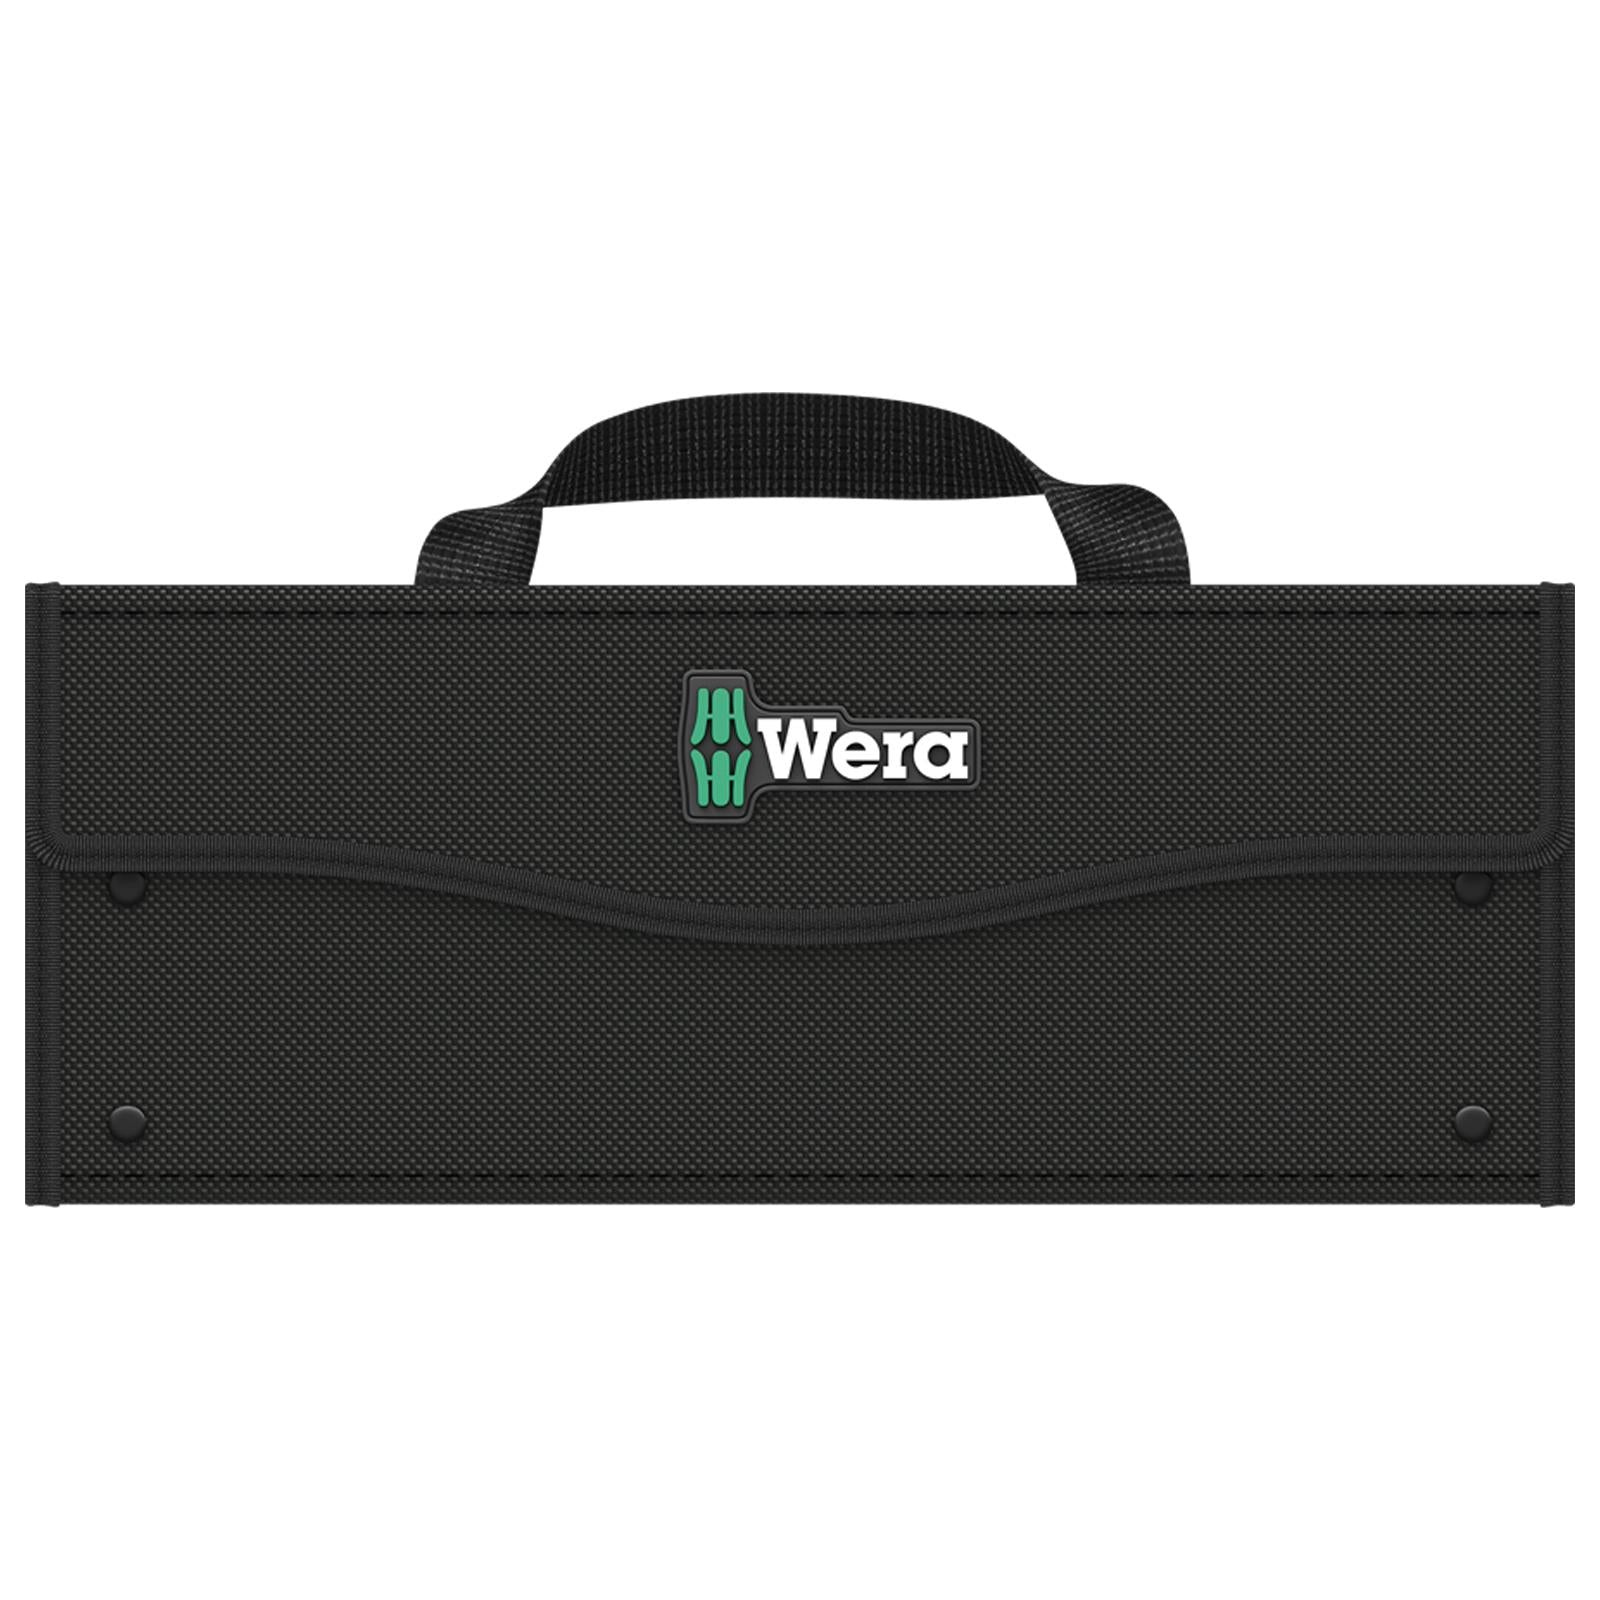 Wera 2go 3 Tool Box Container Storage